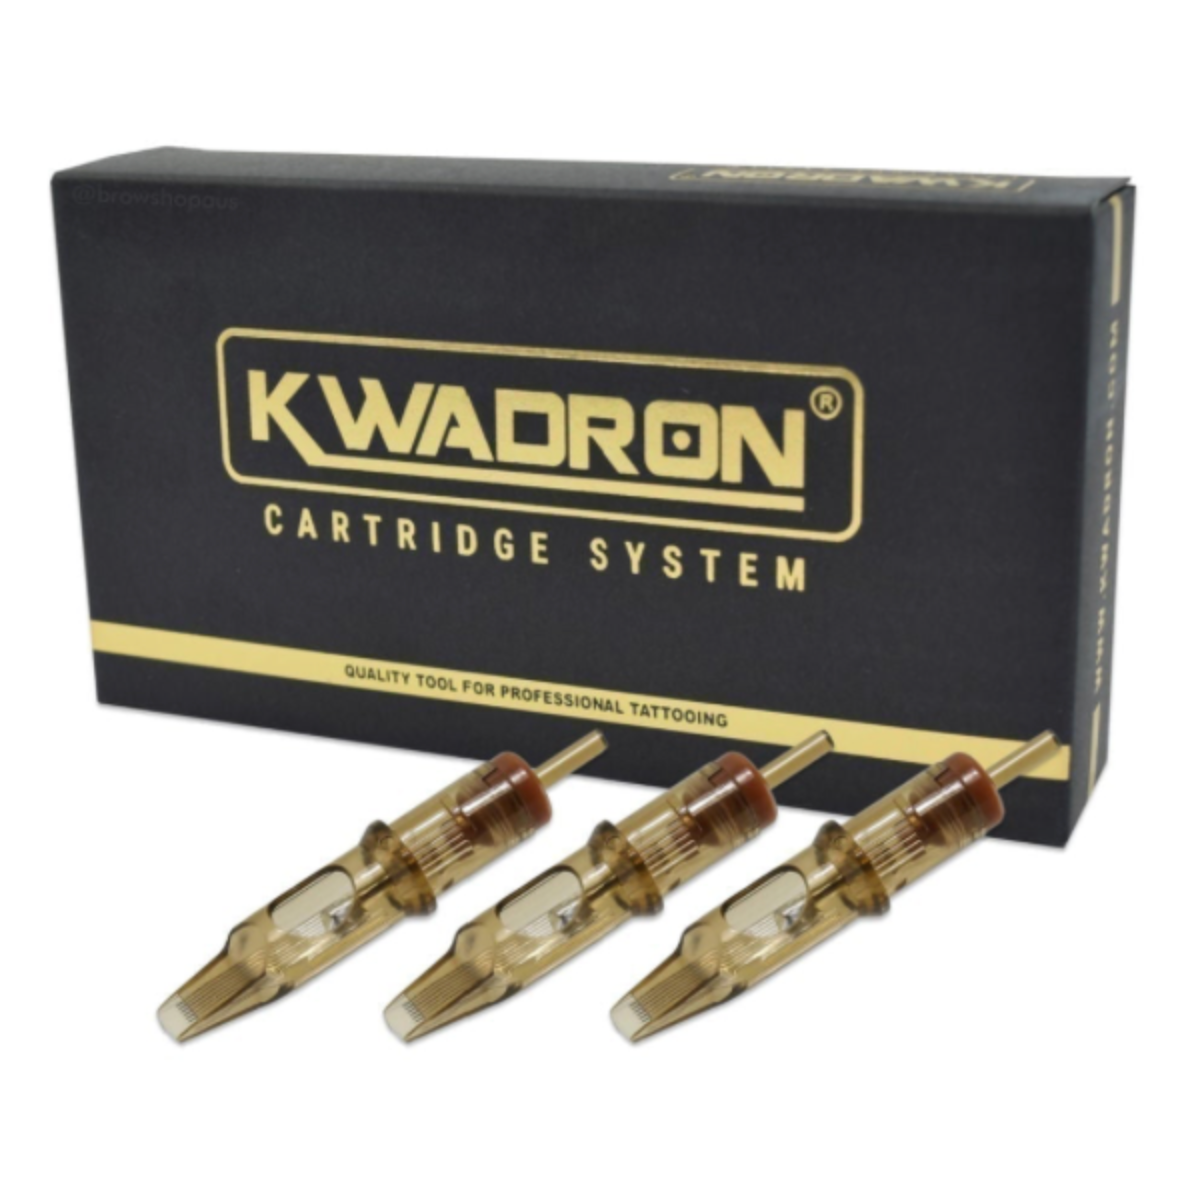 Kwadron Cartridge Needles - 5 Tight Liner Long Taper - 30/5RLLT